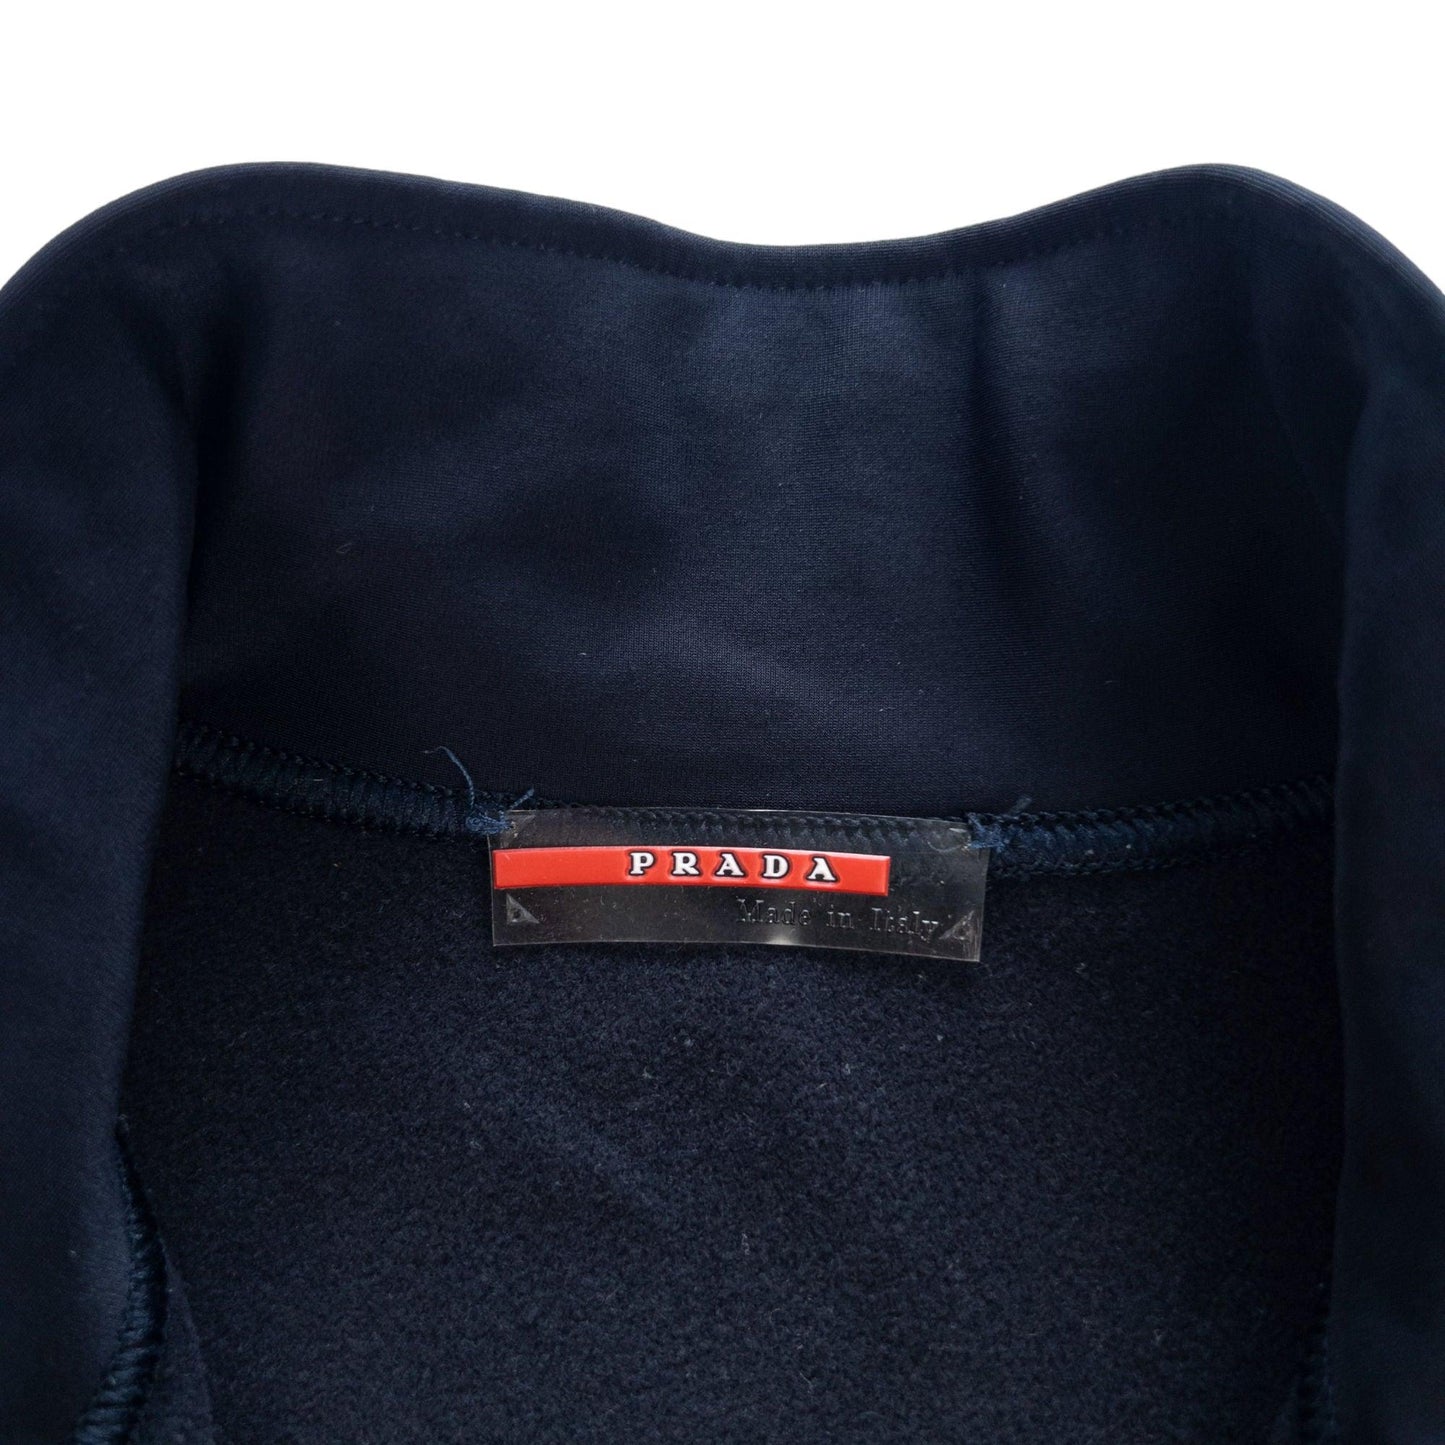 Vintage Prada Zip Up Track Jacket Size S - Known Source